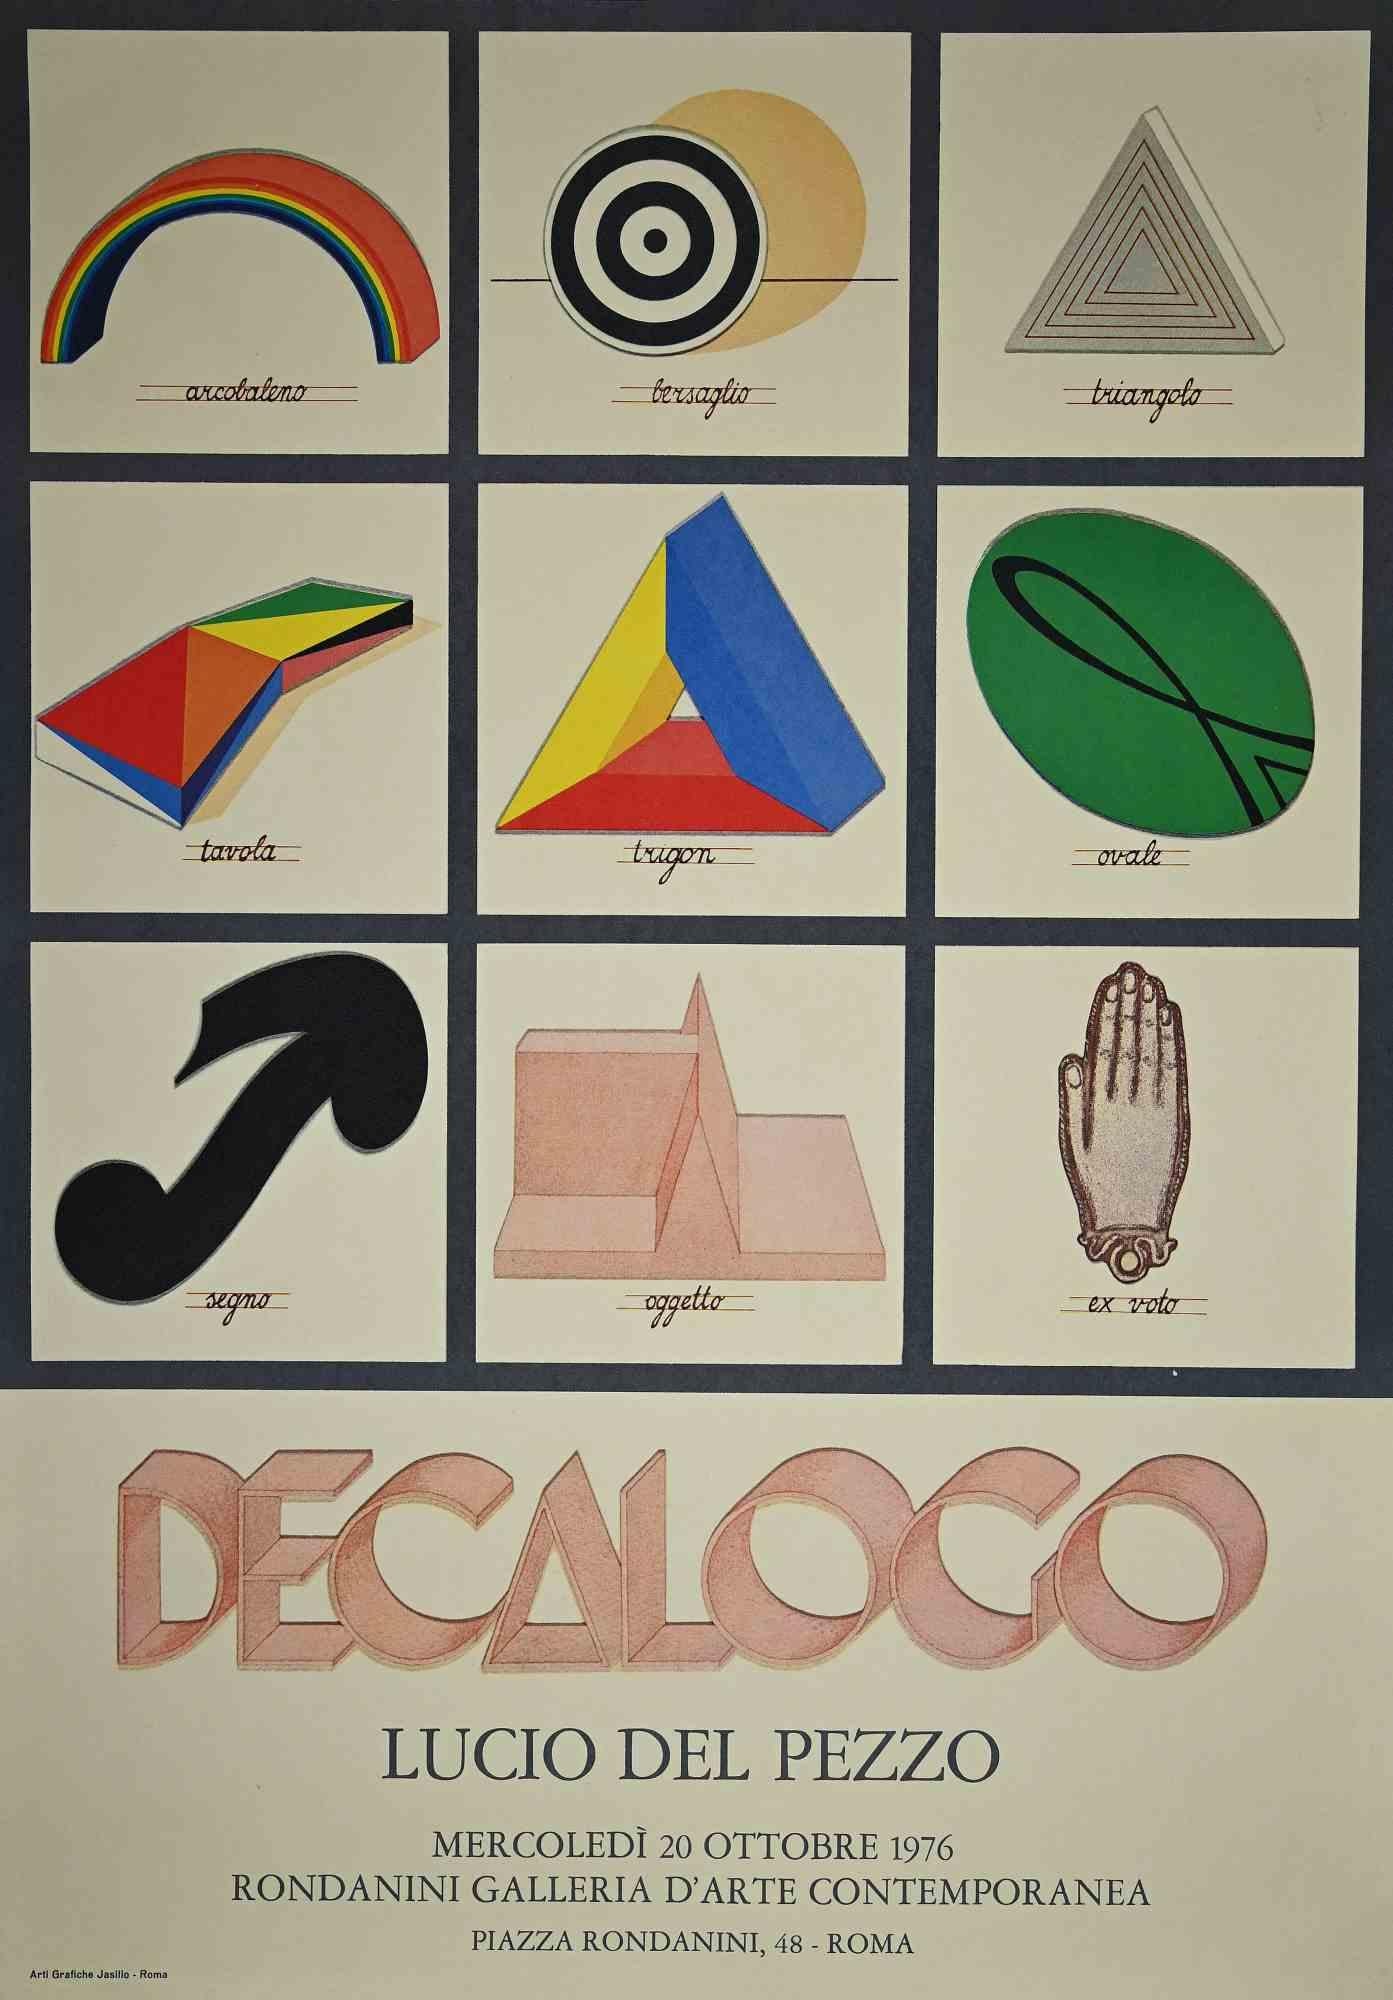 Lucio Del Pezzo Abstract Print - Decalogue - Original Offset by Lucio del Pezzo - 1976